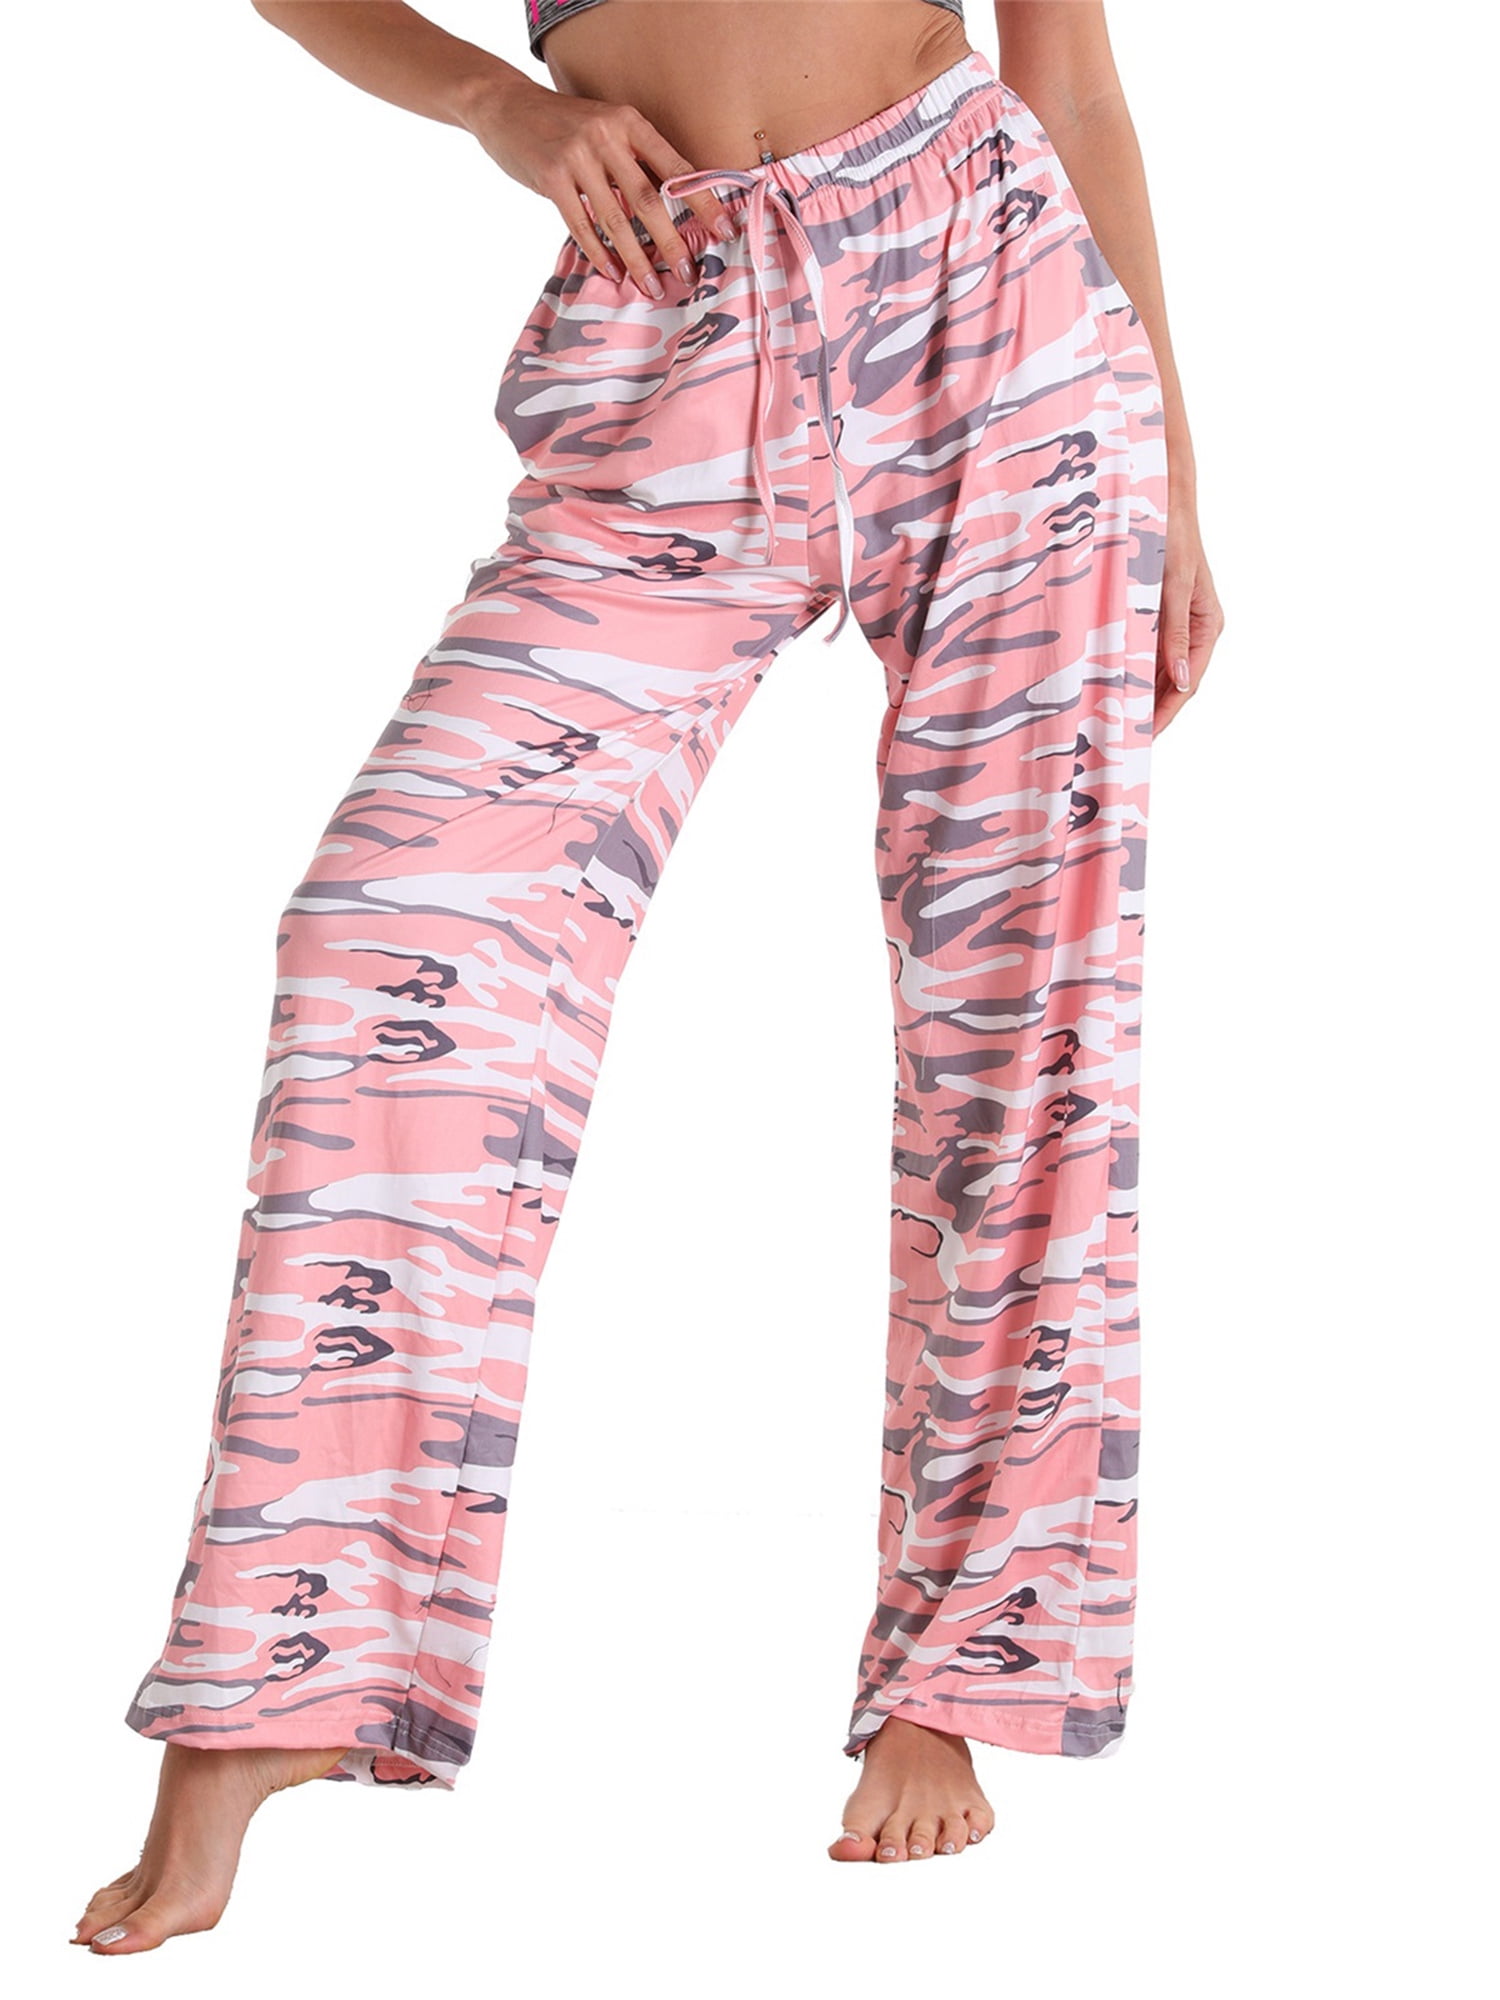 Womens Comfy Casual Pajama Pants Floral Print Drawstring Lounge Wide Leg Pants